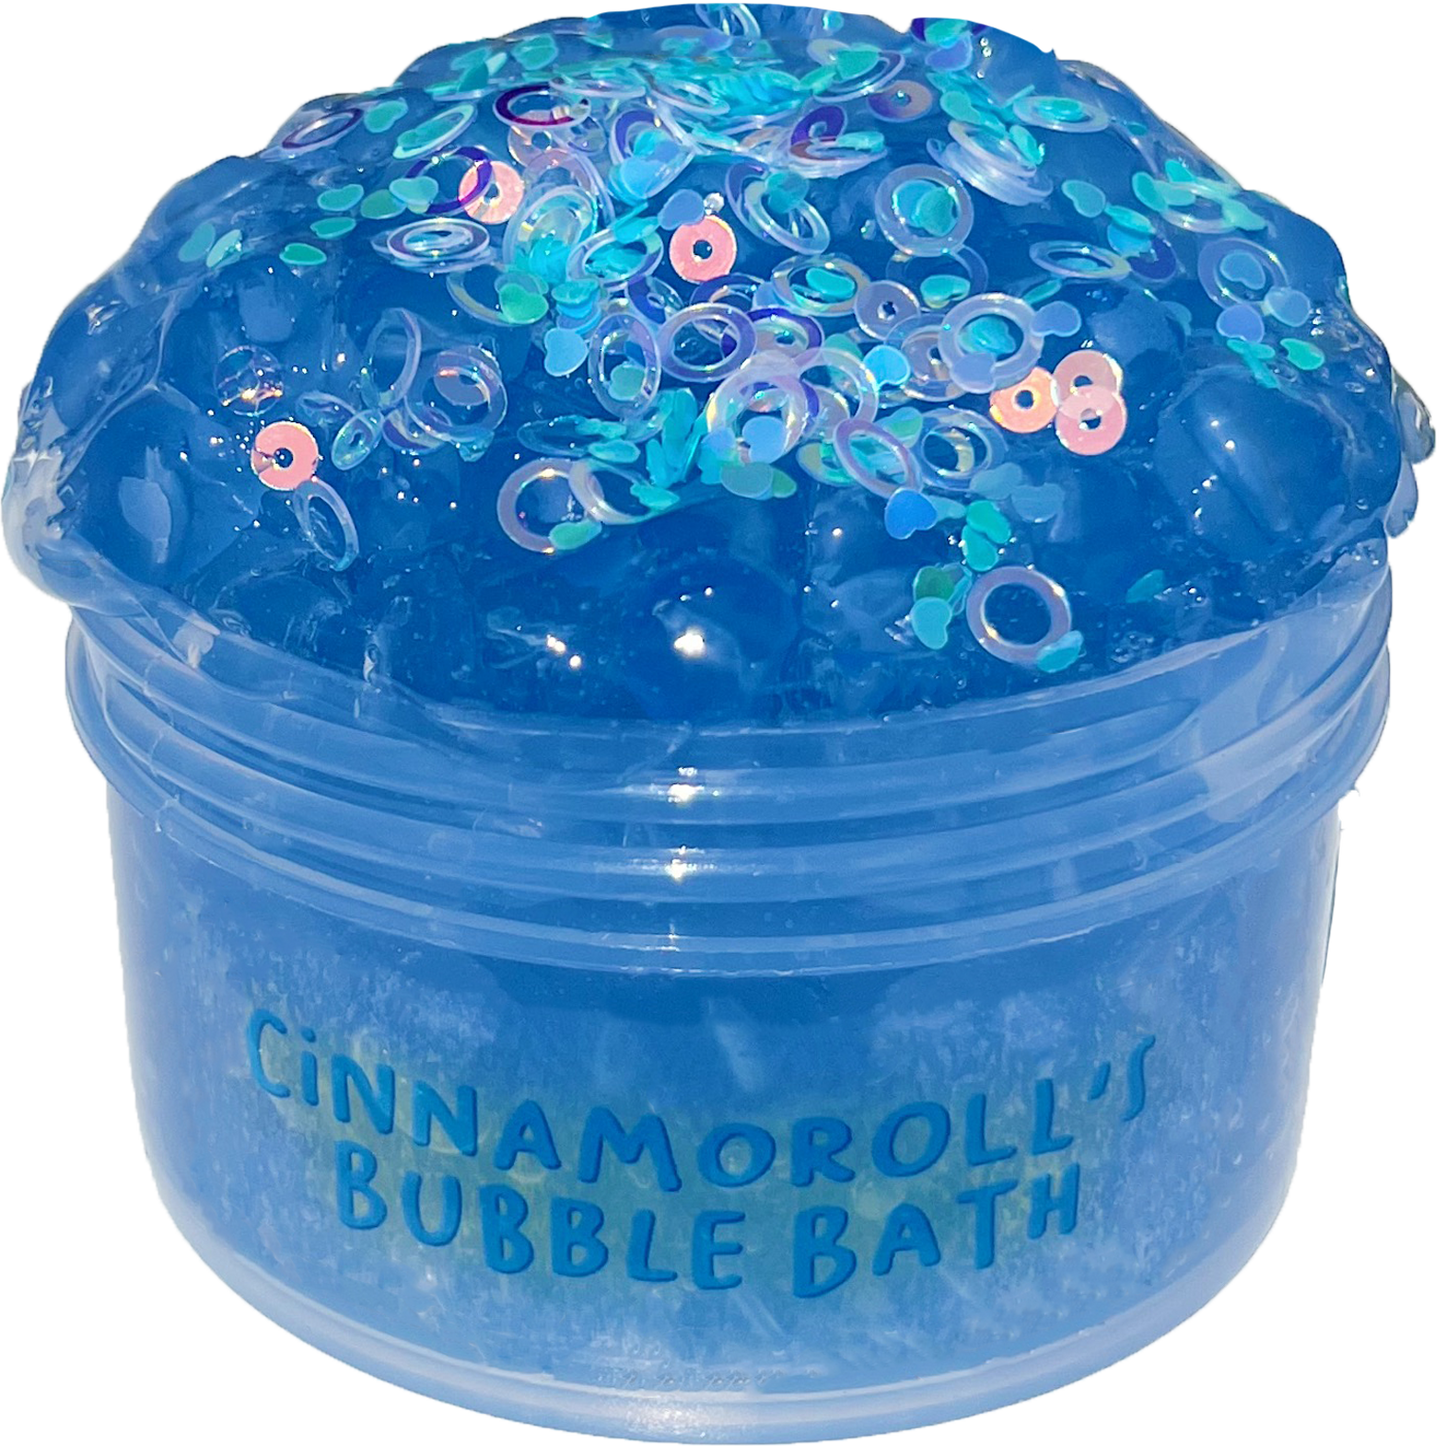 Cinnamoroll’s Bubble Bath